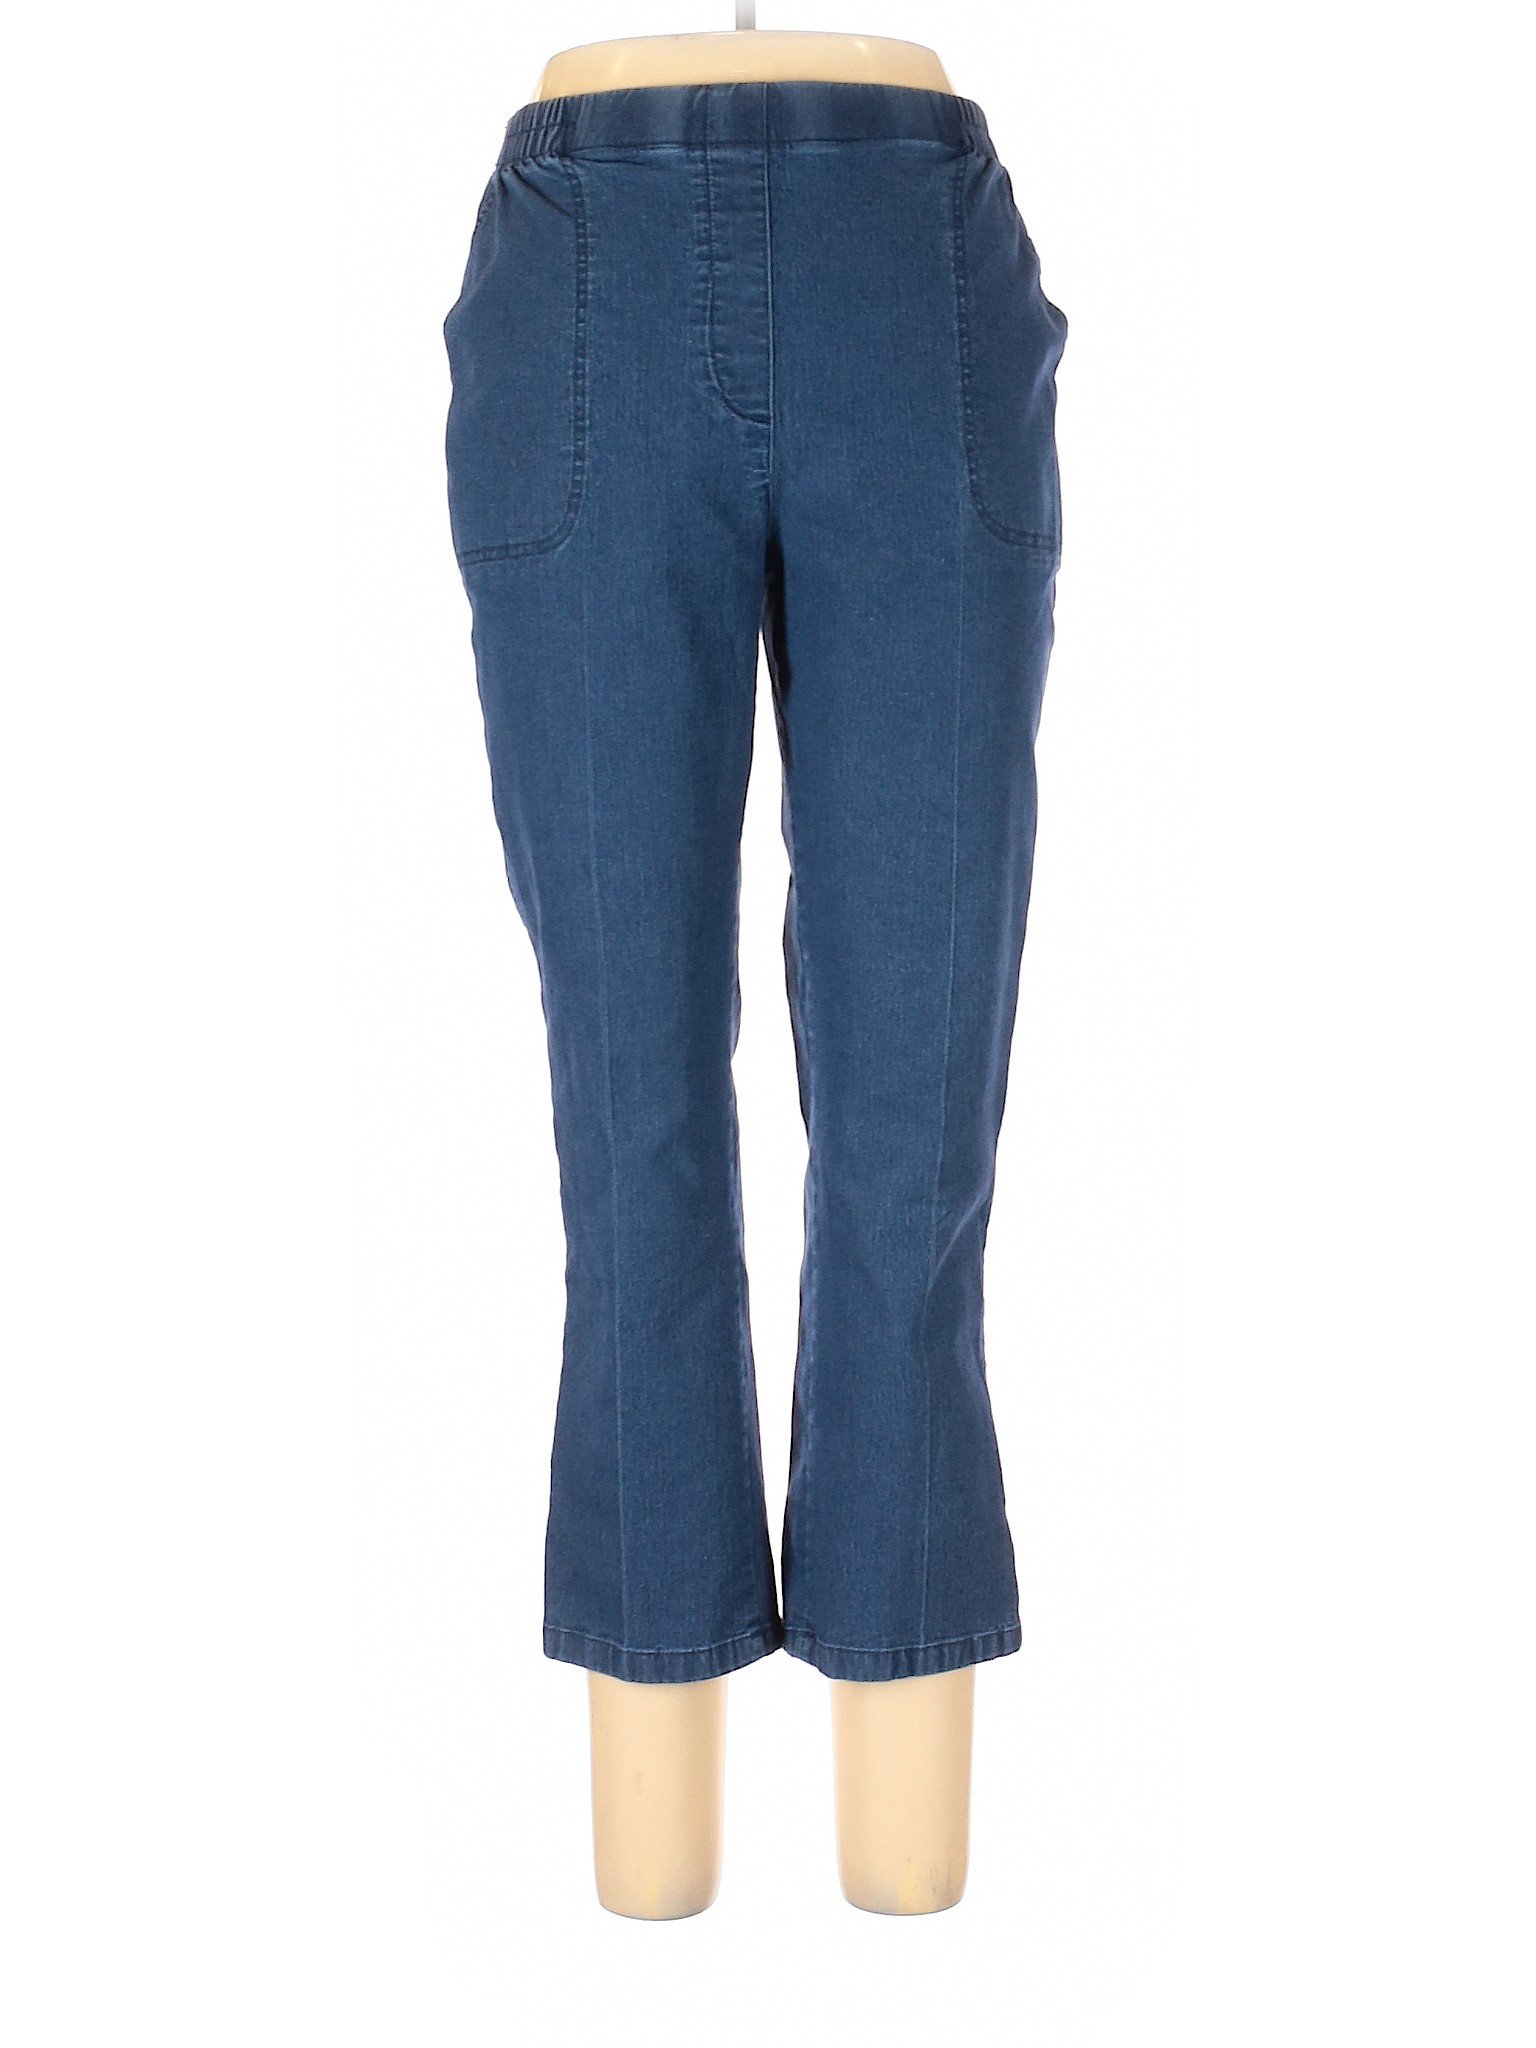 Allison Daley Women Blue Casual Pants 12 Petites | eBay